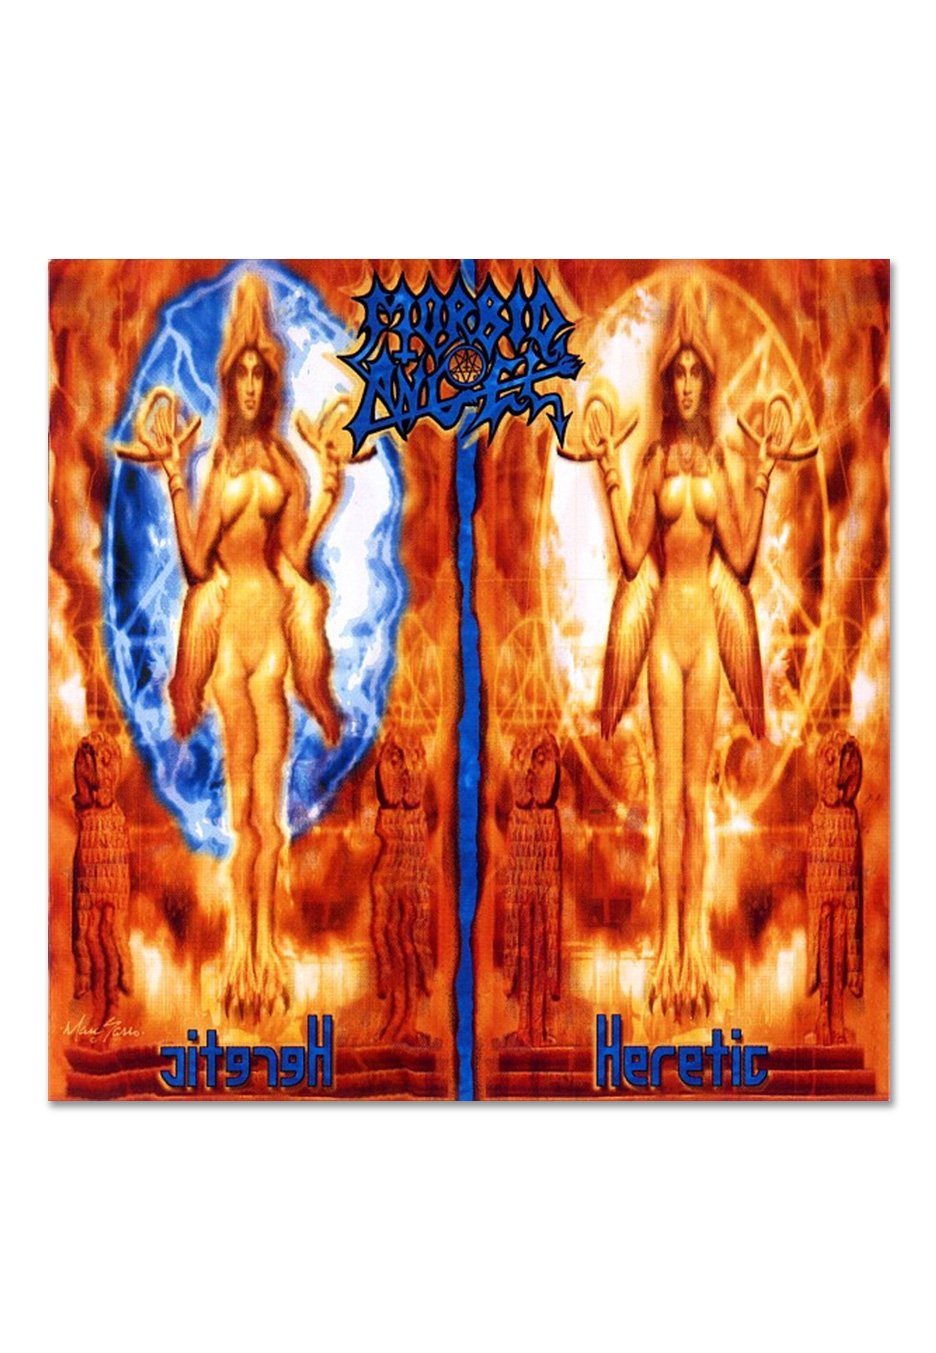 Morbid Angel - Heretic - Digipak CD